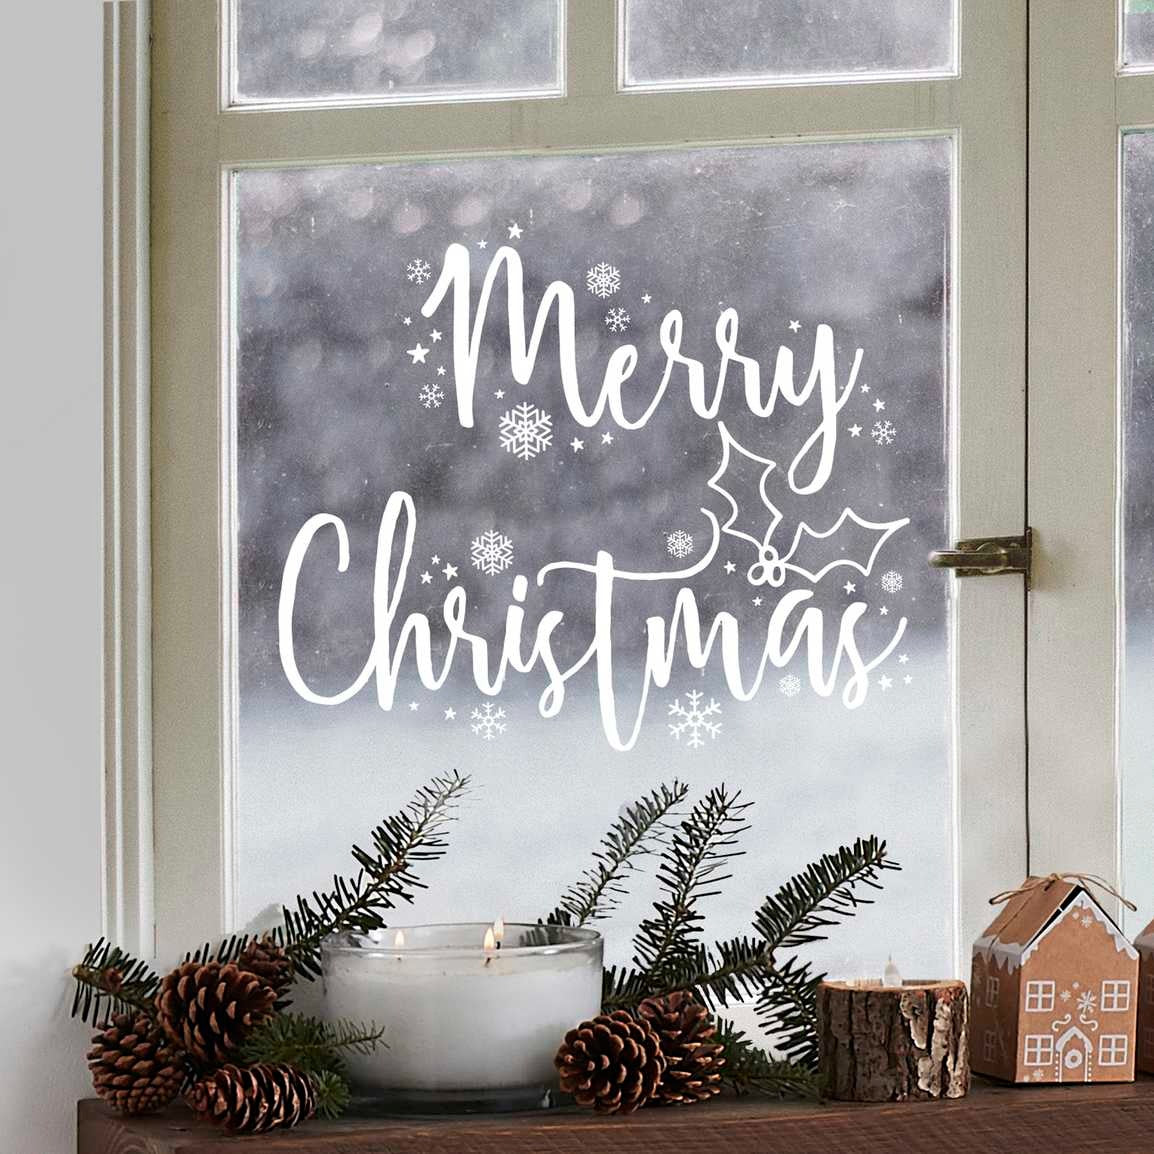 Merry Christmas window sticker